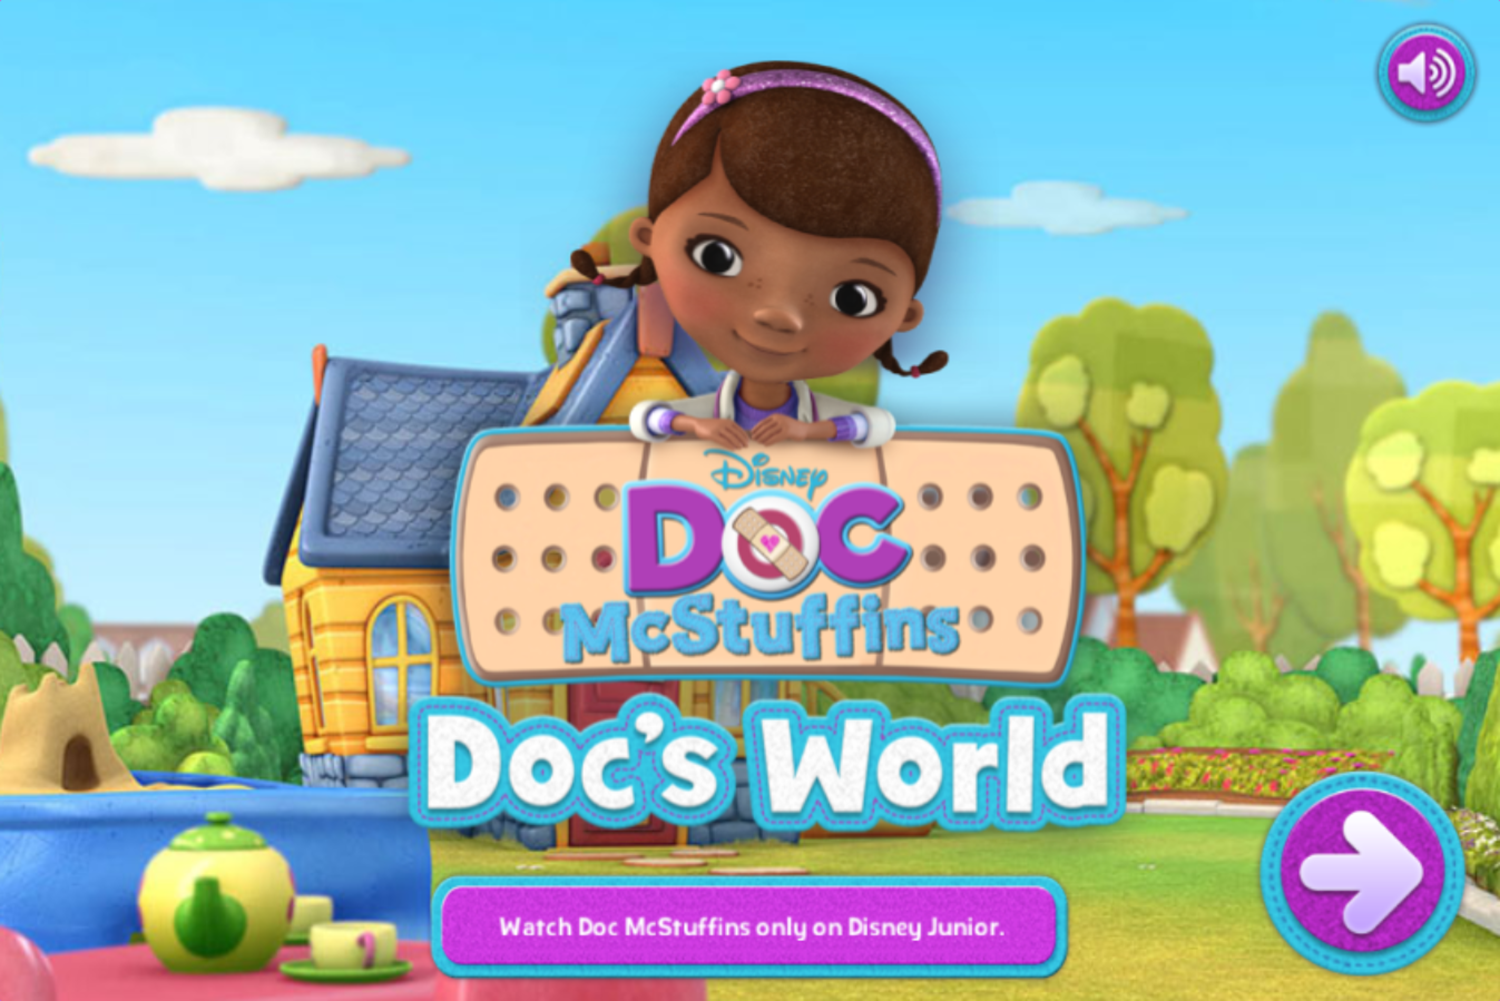 Doc McStuffins Doc's World Game Welcome Screen Screenshot.